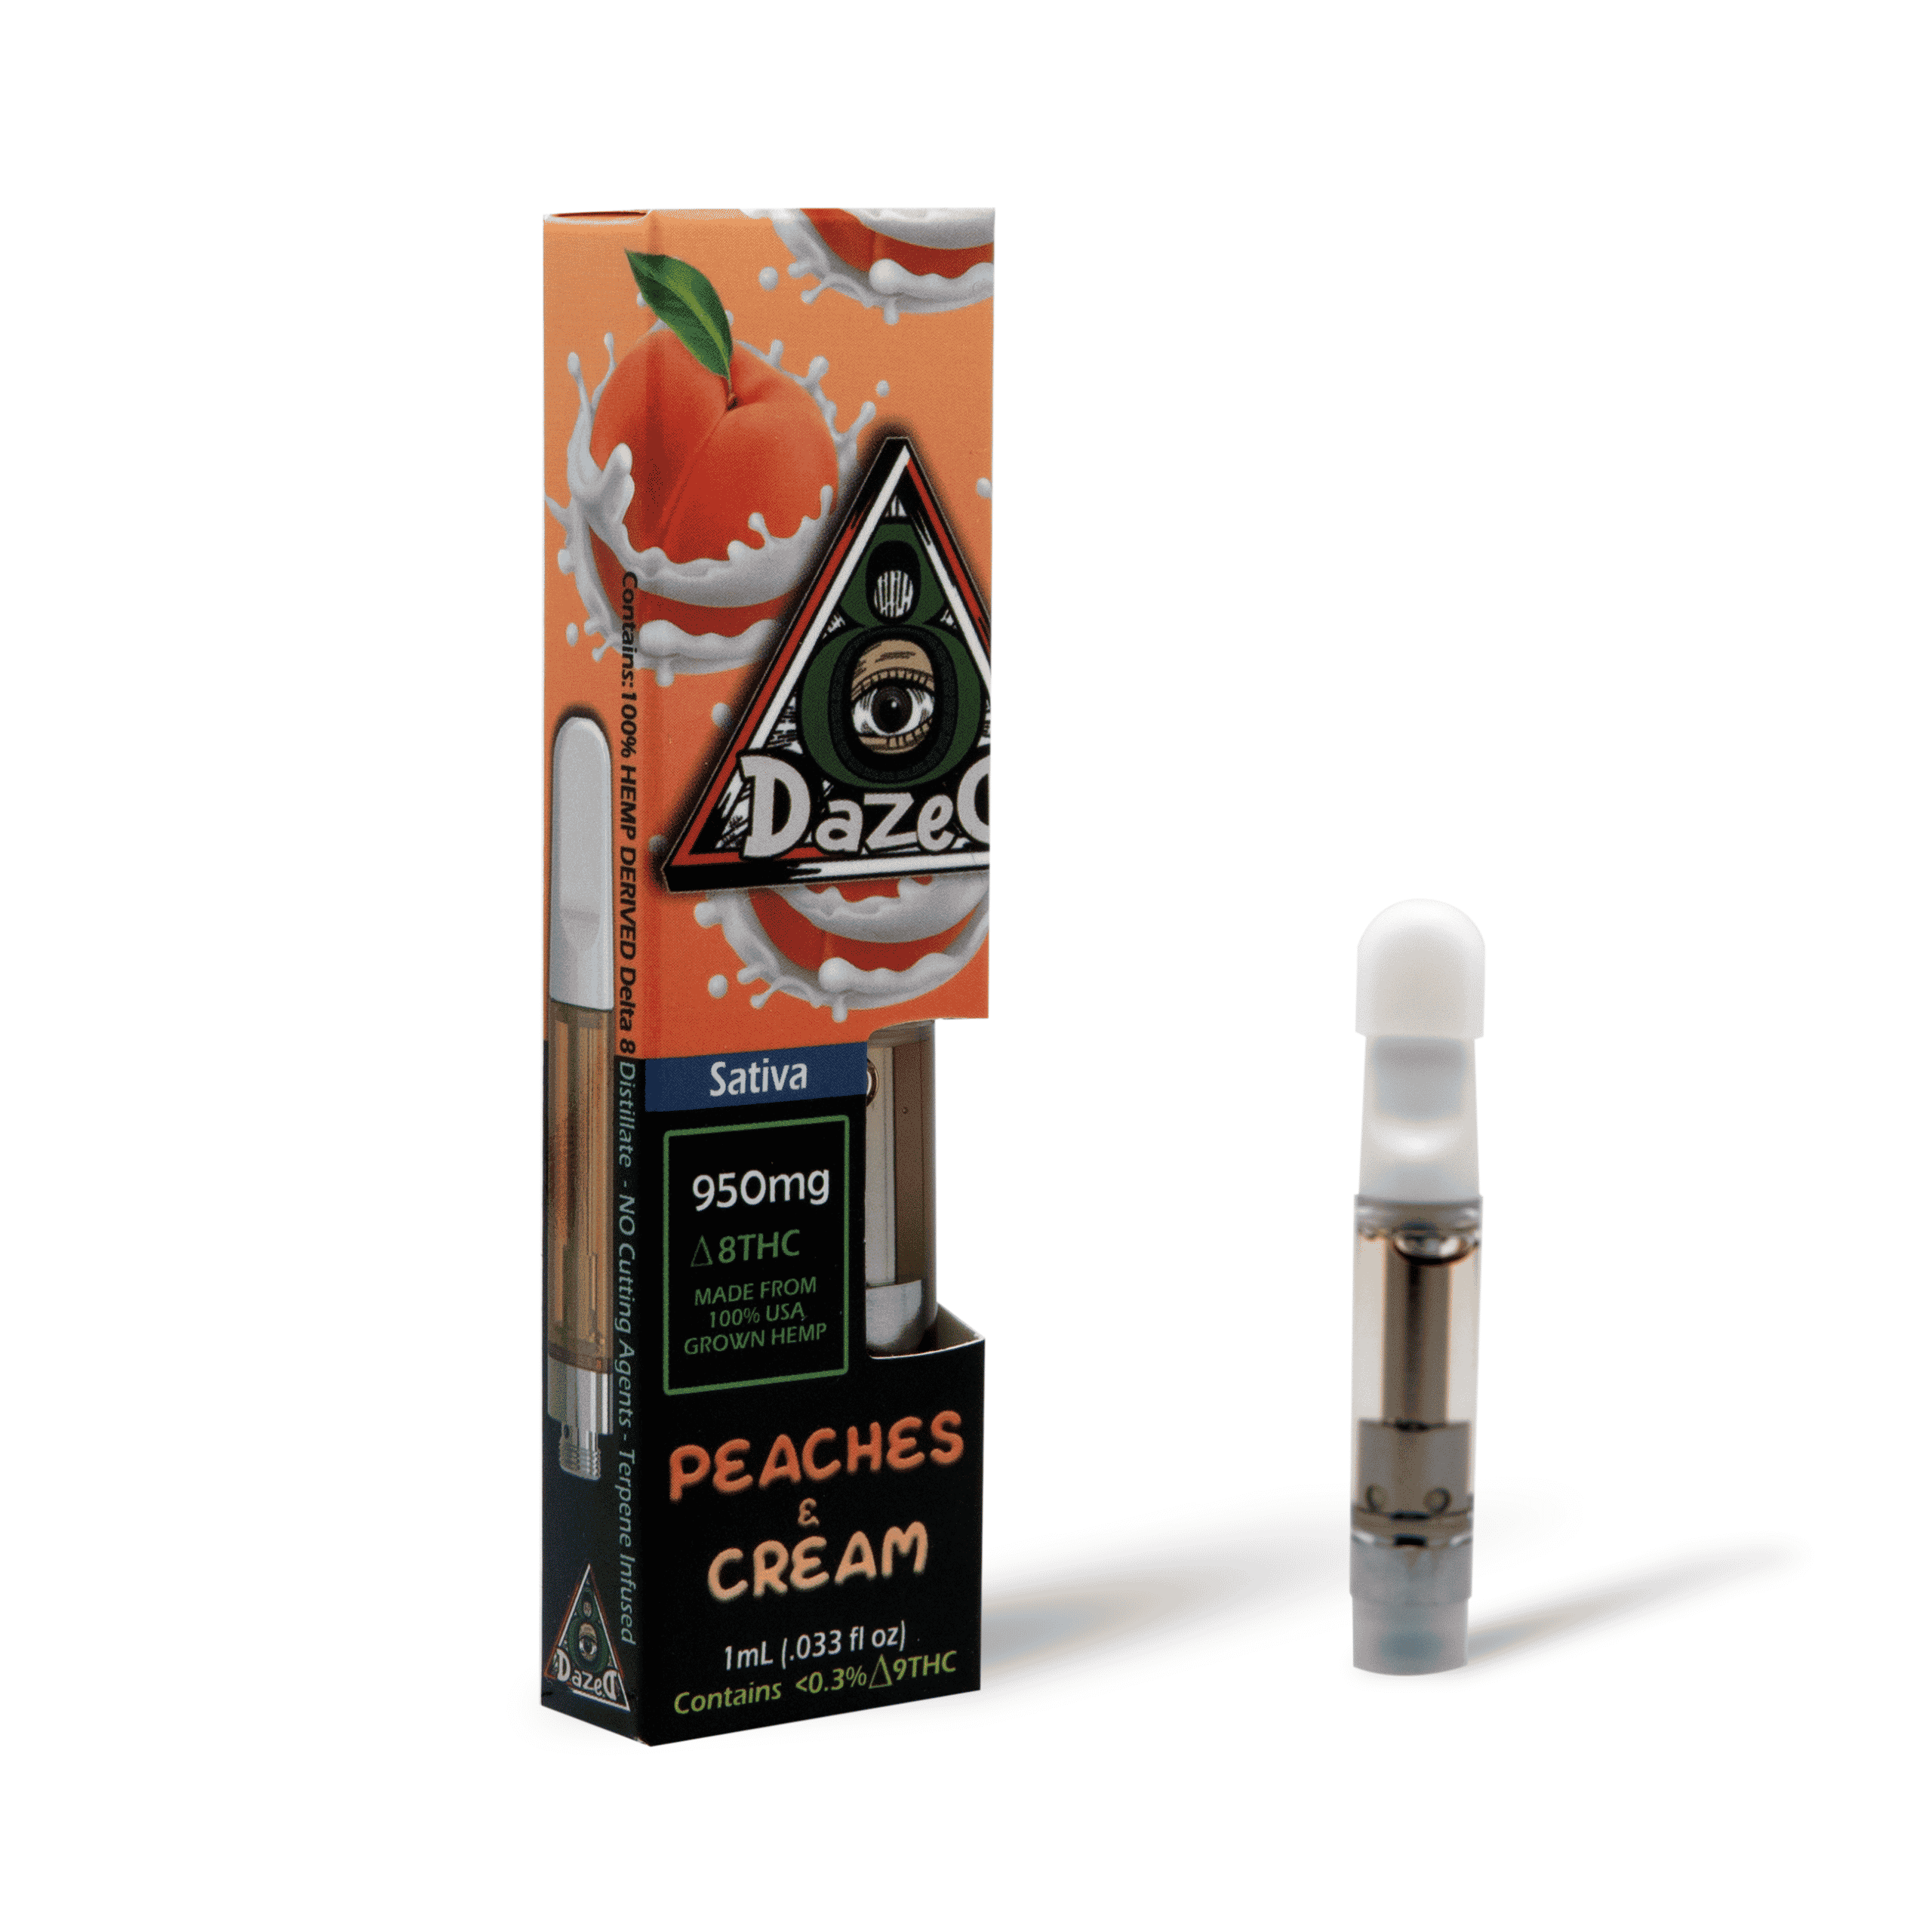 DazeD8 Peaches Cream Delta 8 Cartridge (1g) Best Price